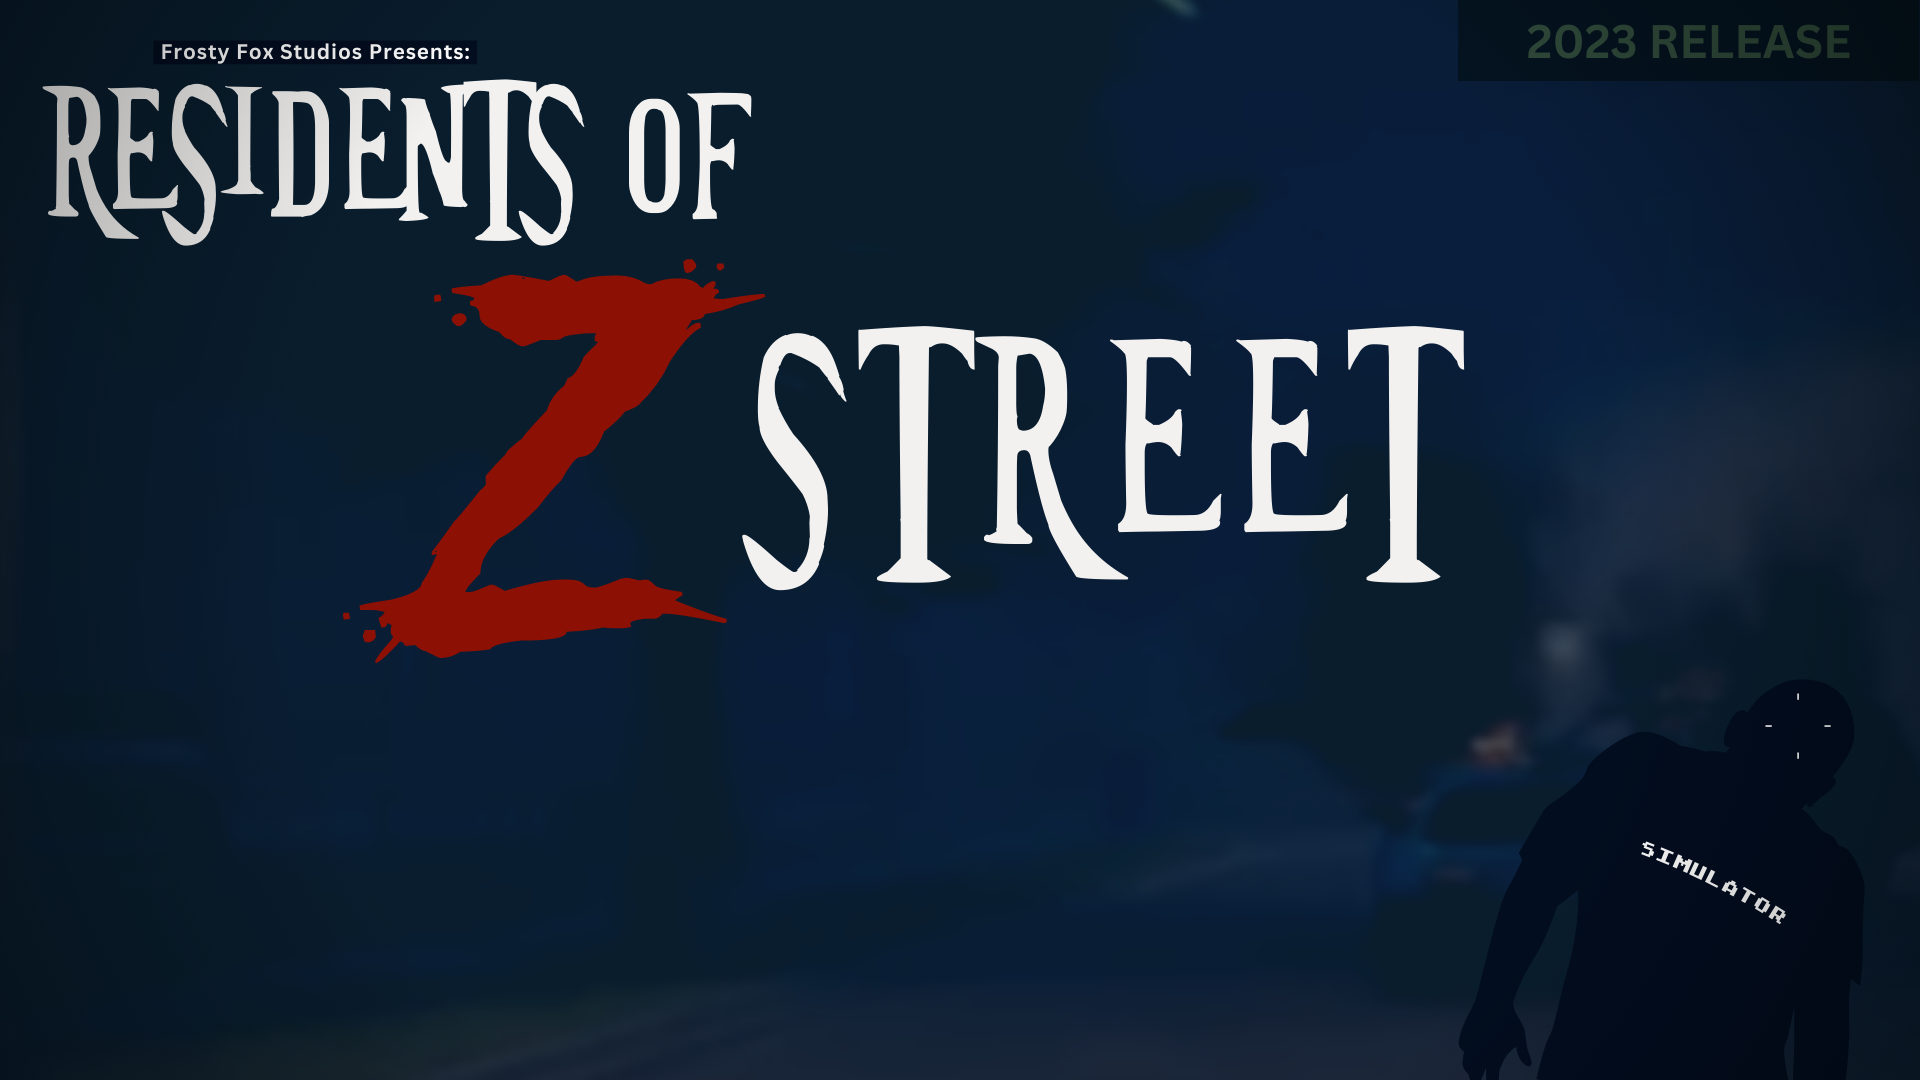 Residents of Z Street